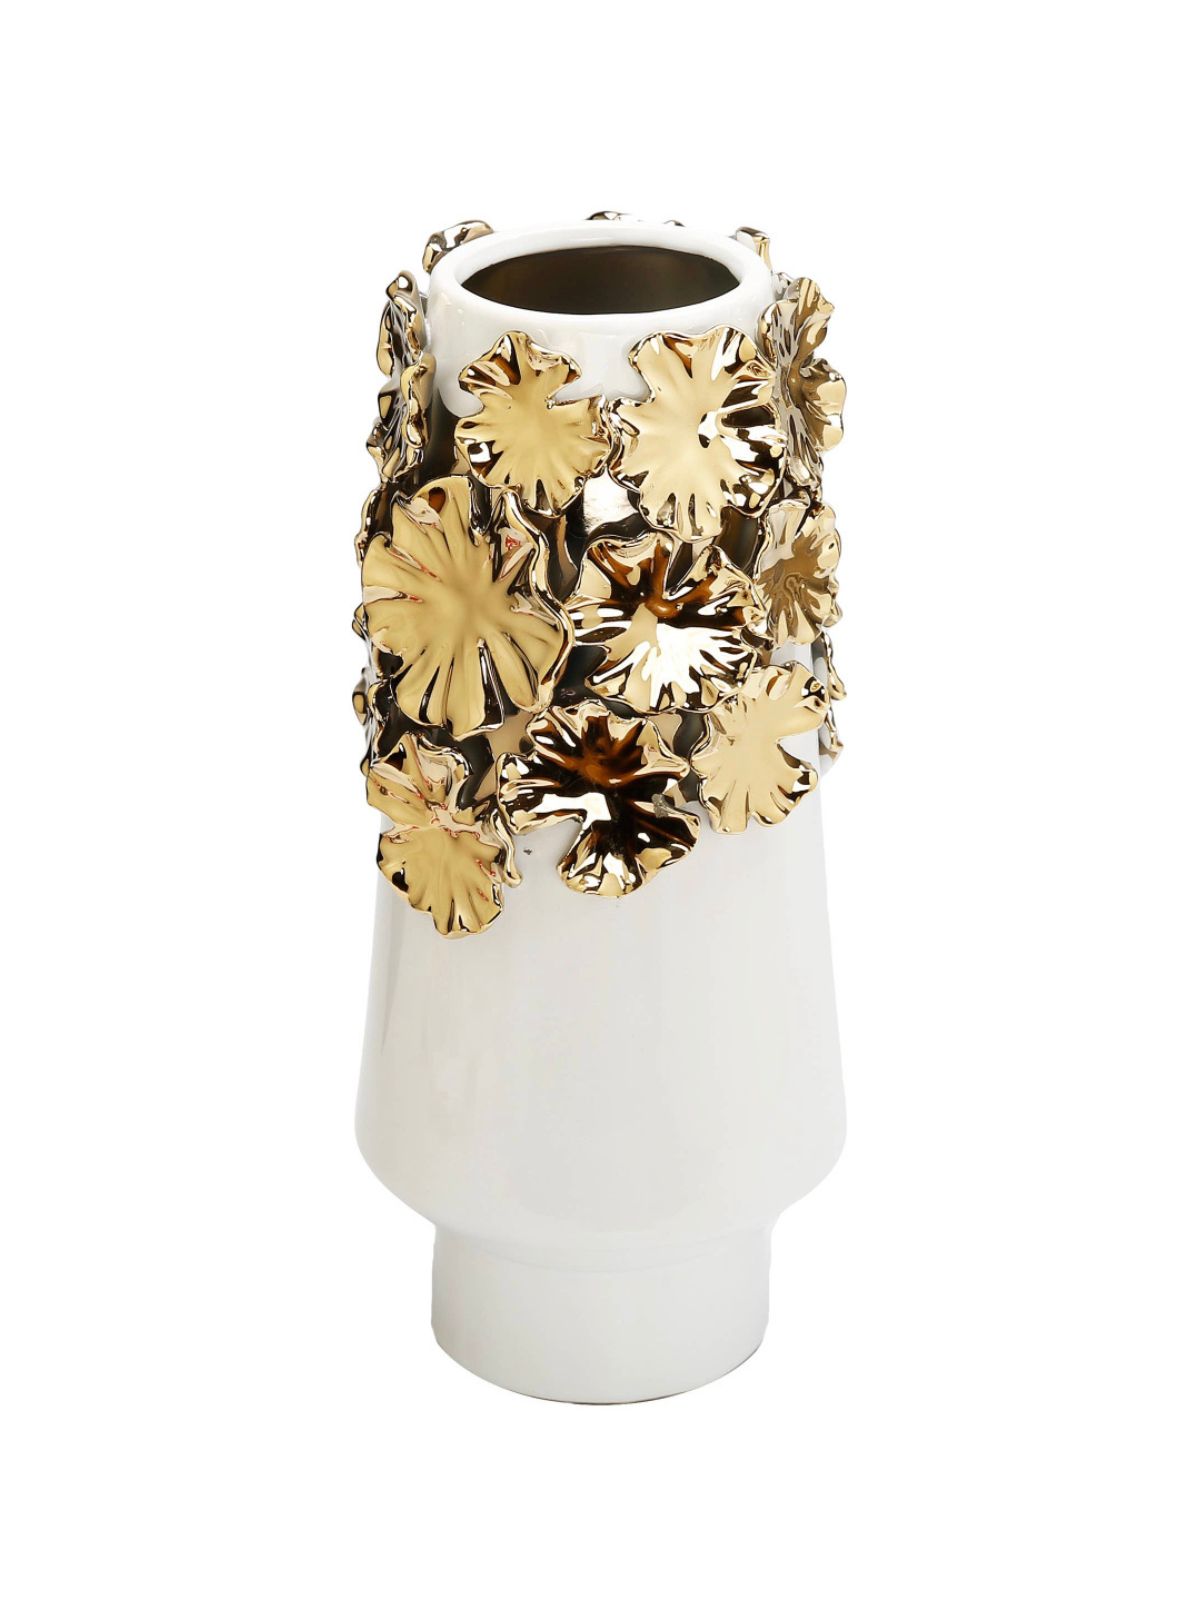 14H White Ceramic Decorative Vase with Luxury Gold Dimensional Florets - KYA Home Decor